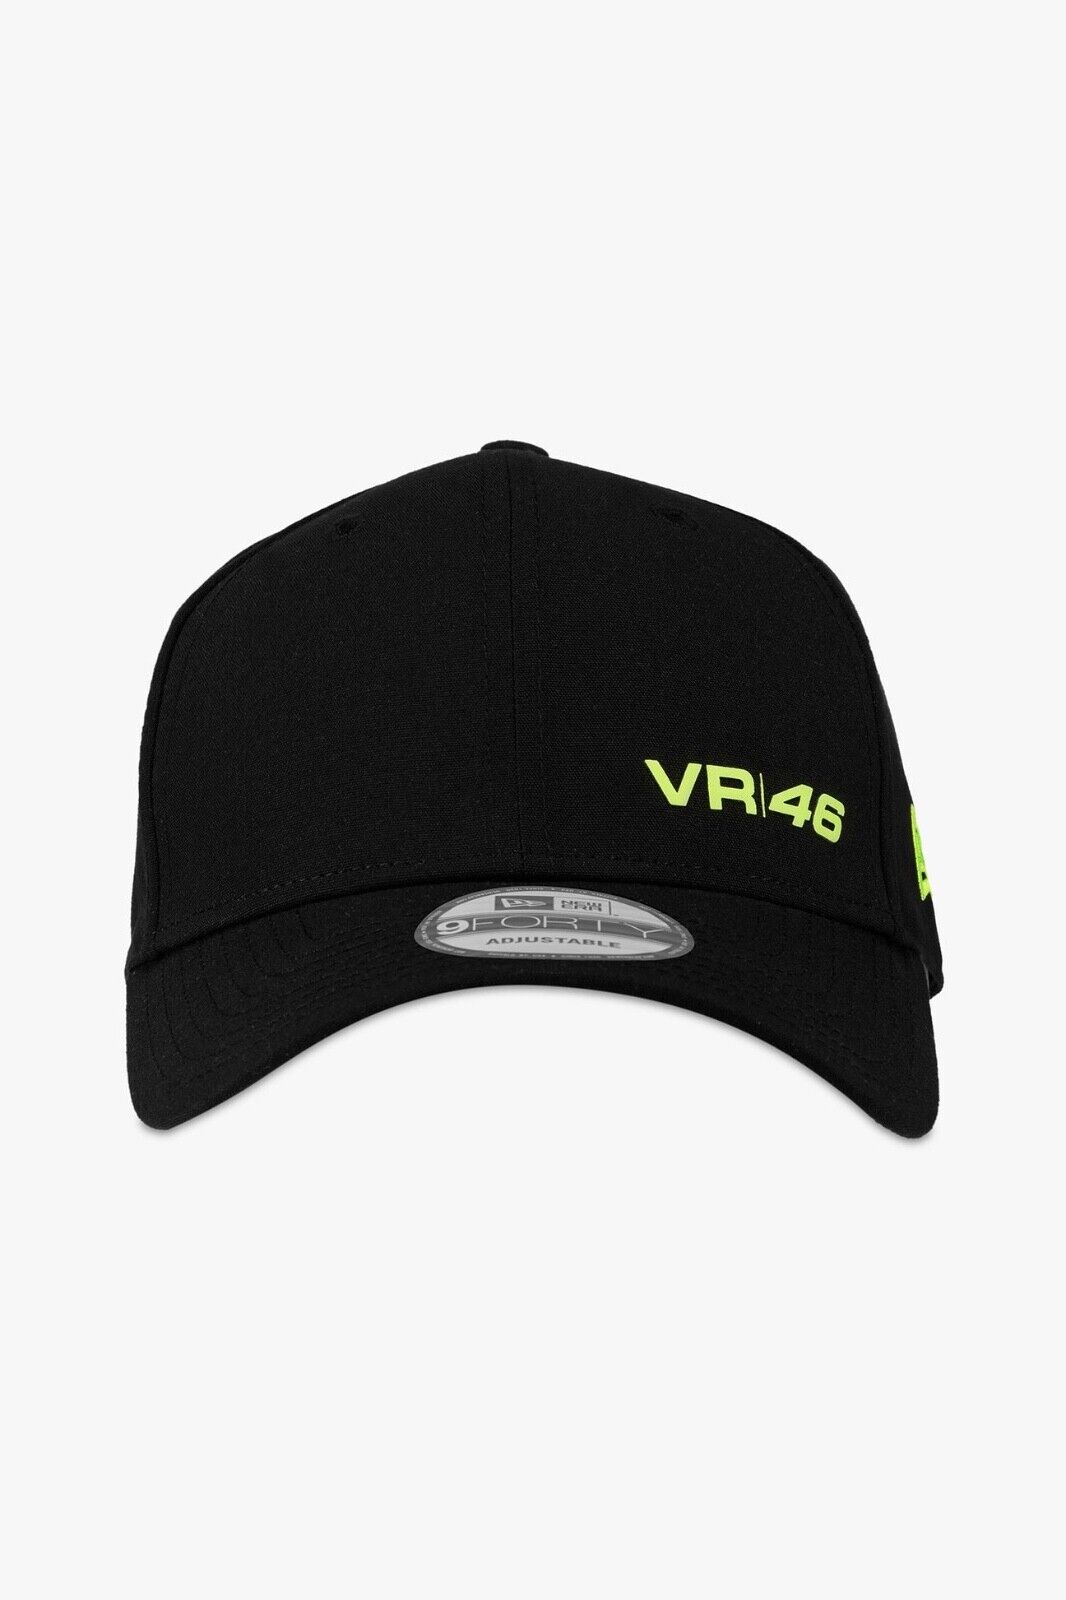 New Era Official Valentino Rossi VR46 Black 9Forty Baseball Cap - 60334556